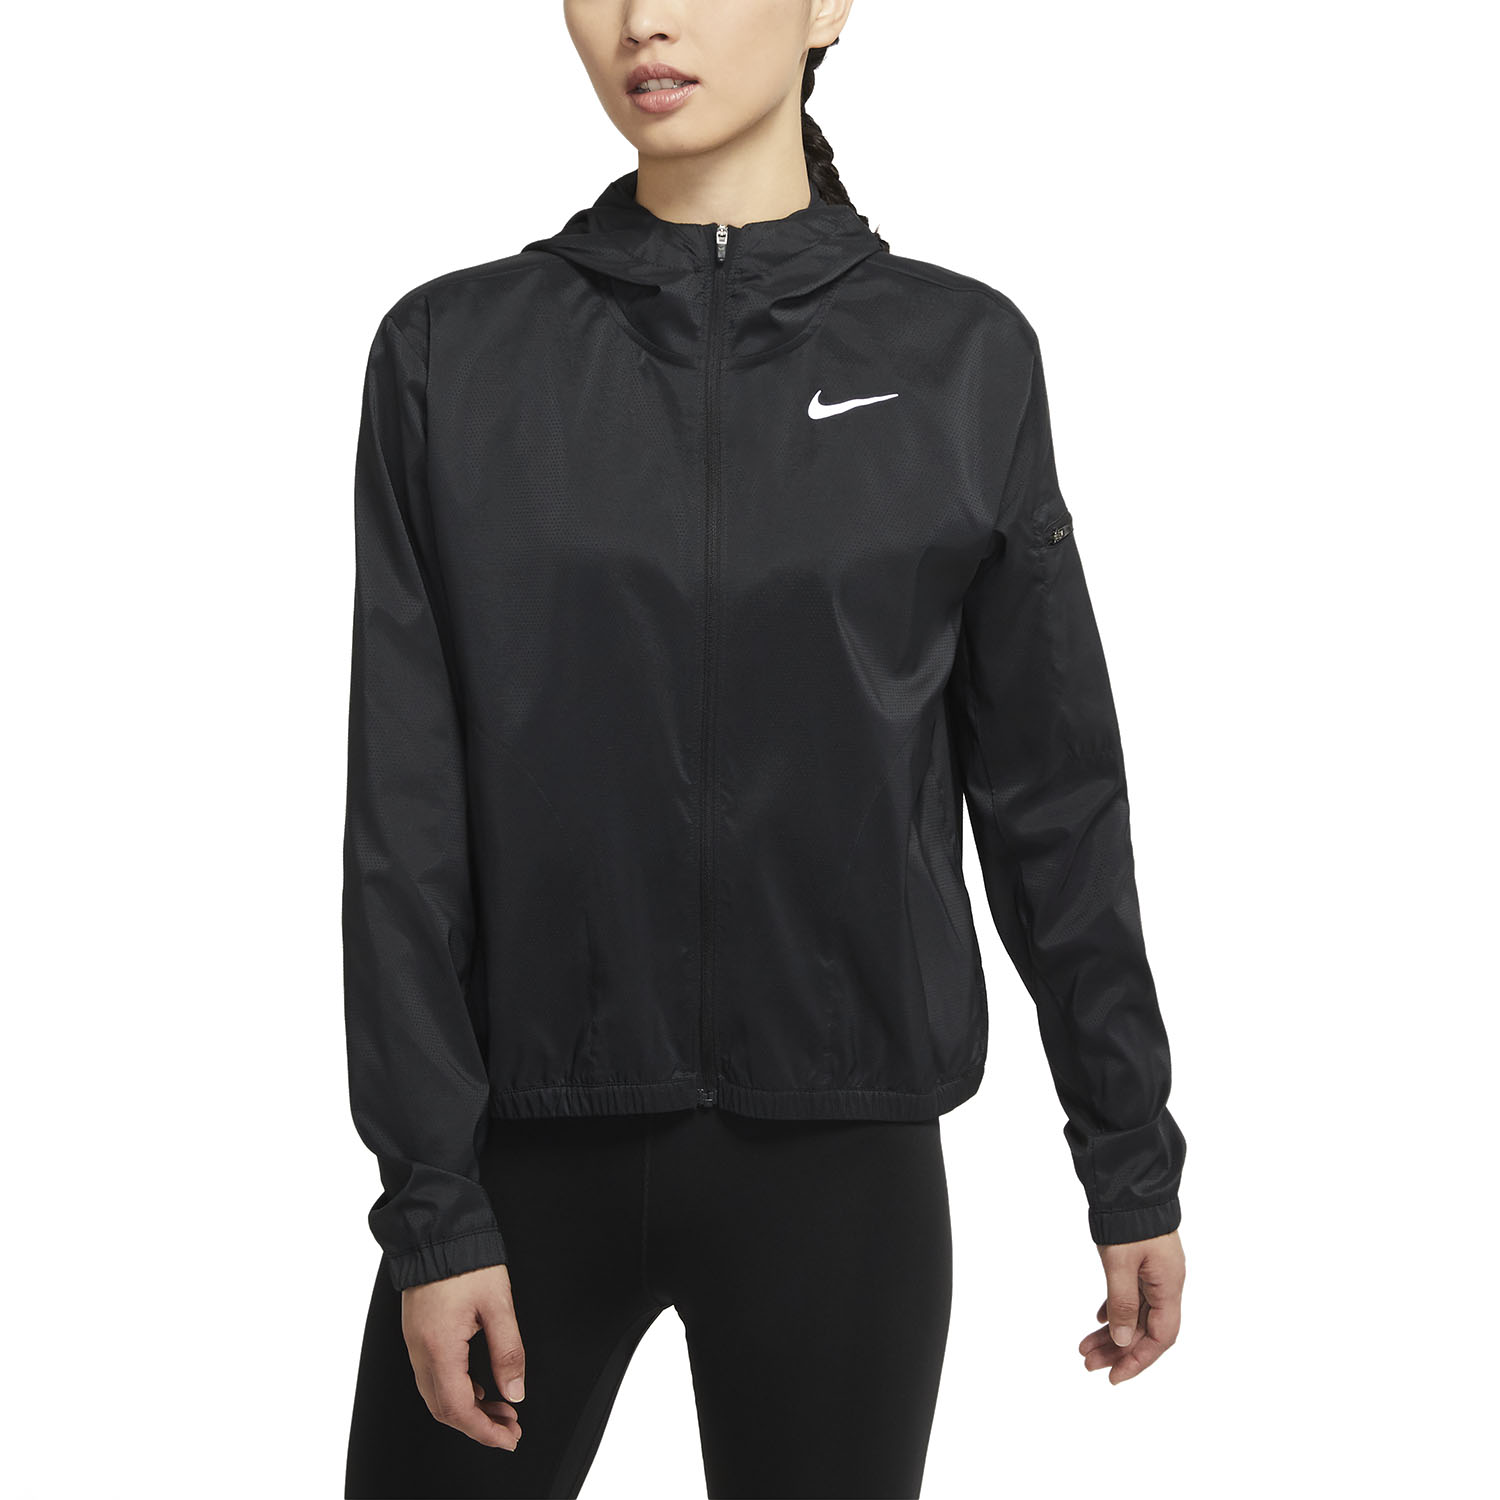 Yo serie ego Nike Impossibly Light Chaqueta de Running Mujer - Black